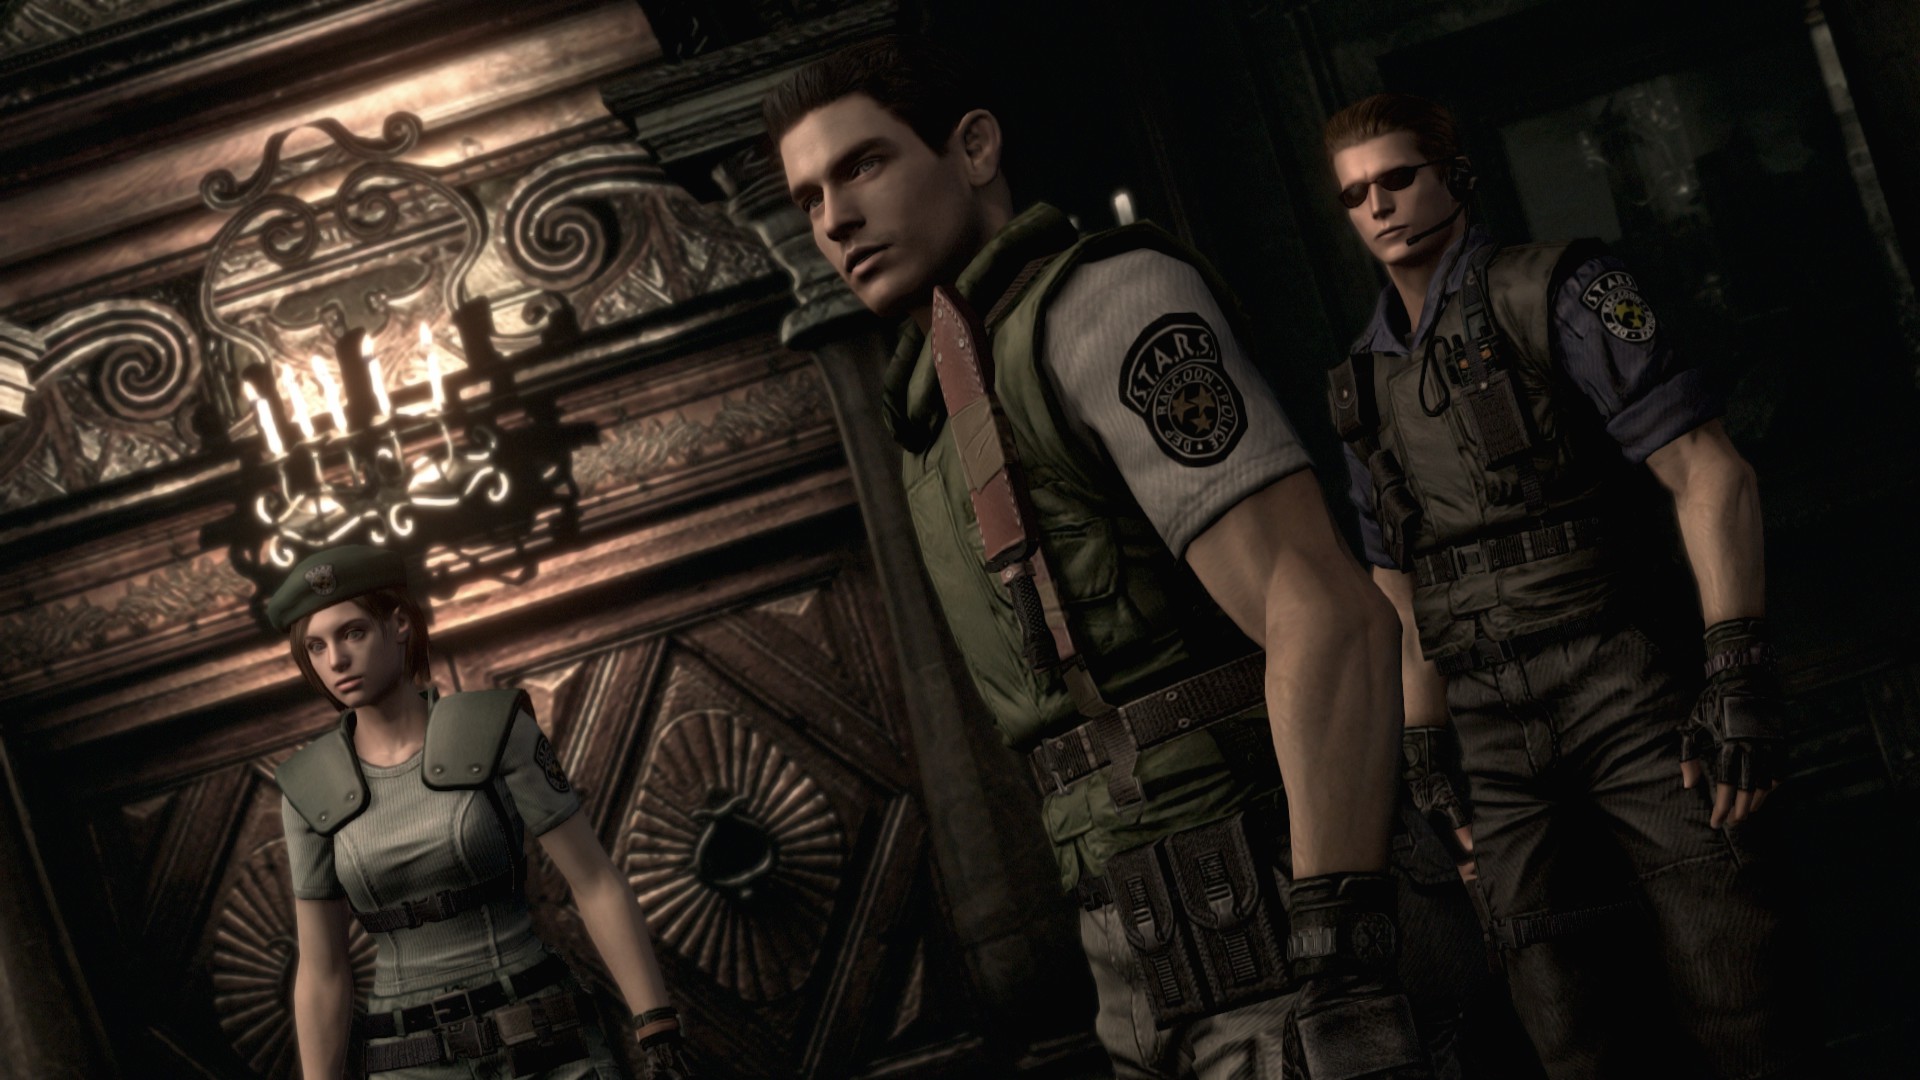 Resident Evil PC Summary